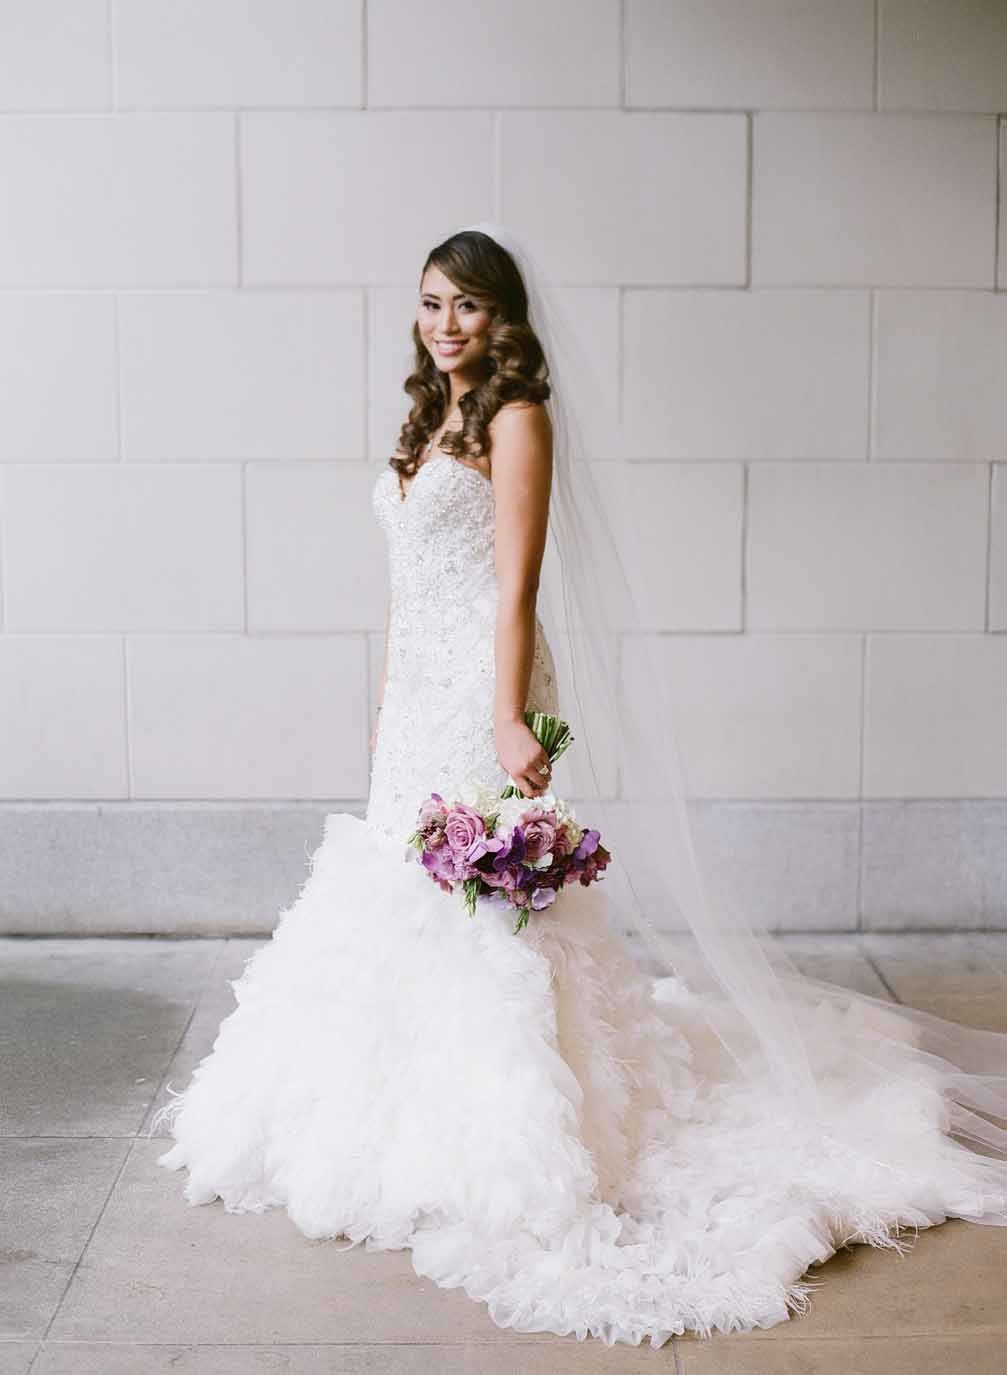 Beautiful bride with purple wedding bouquet